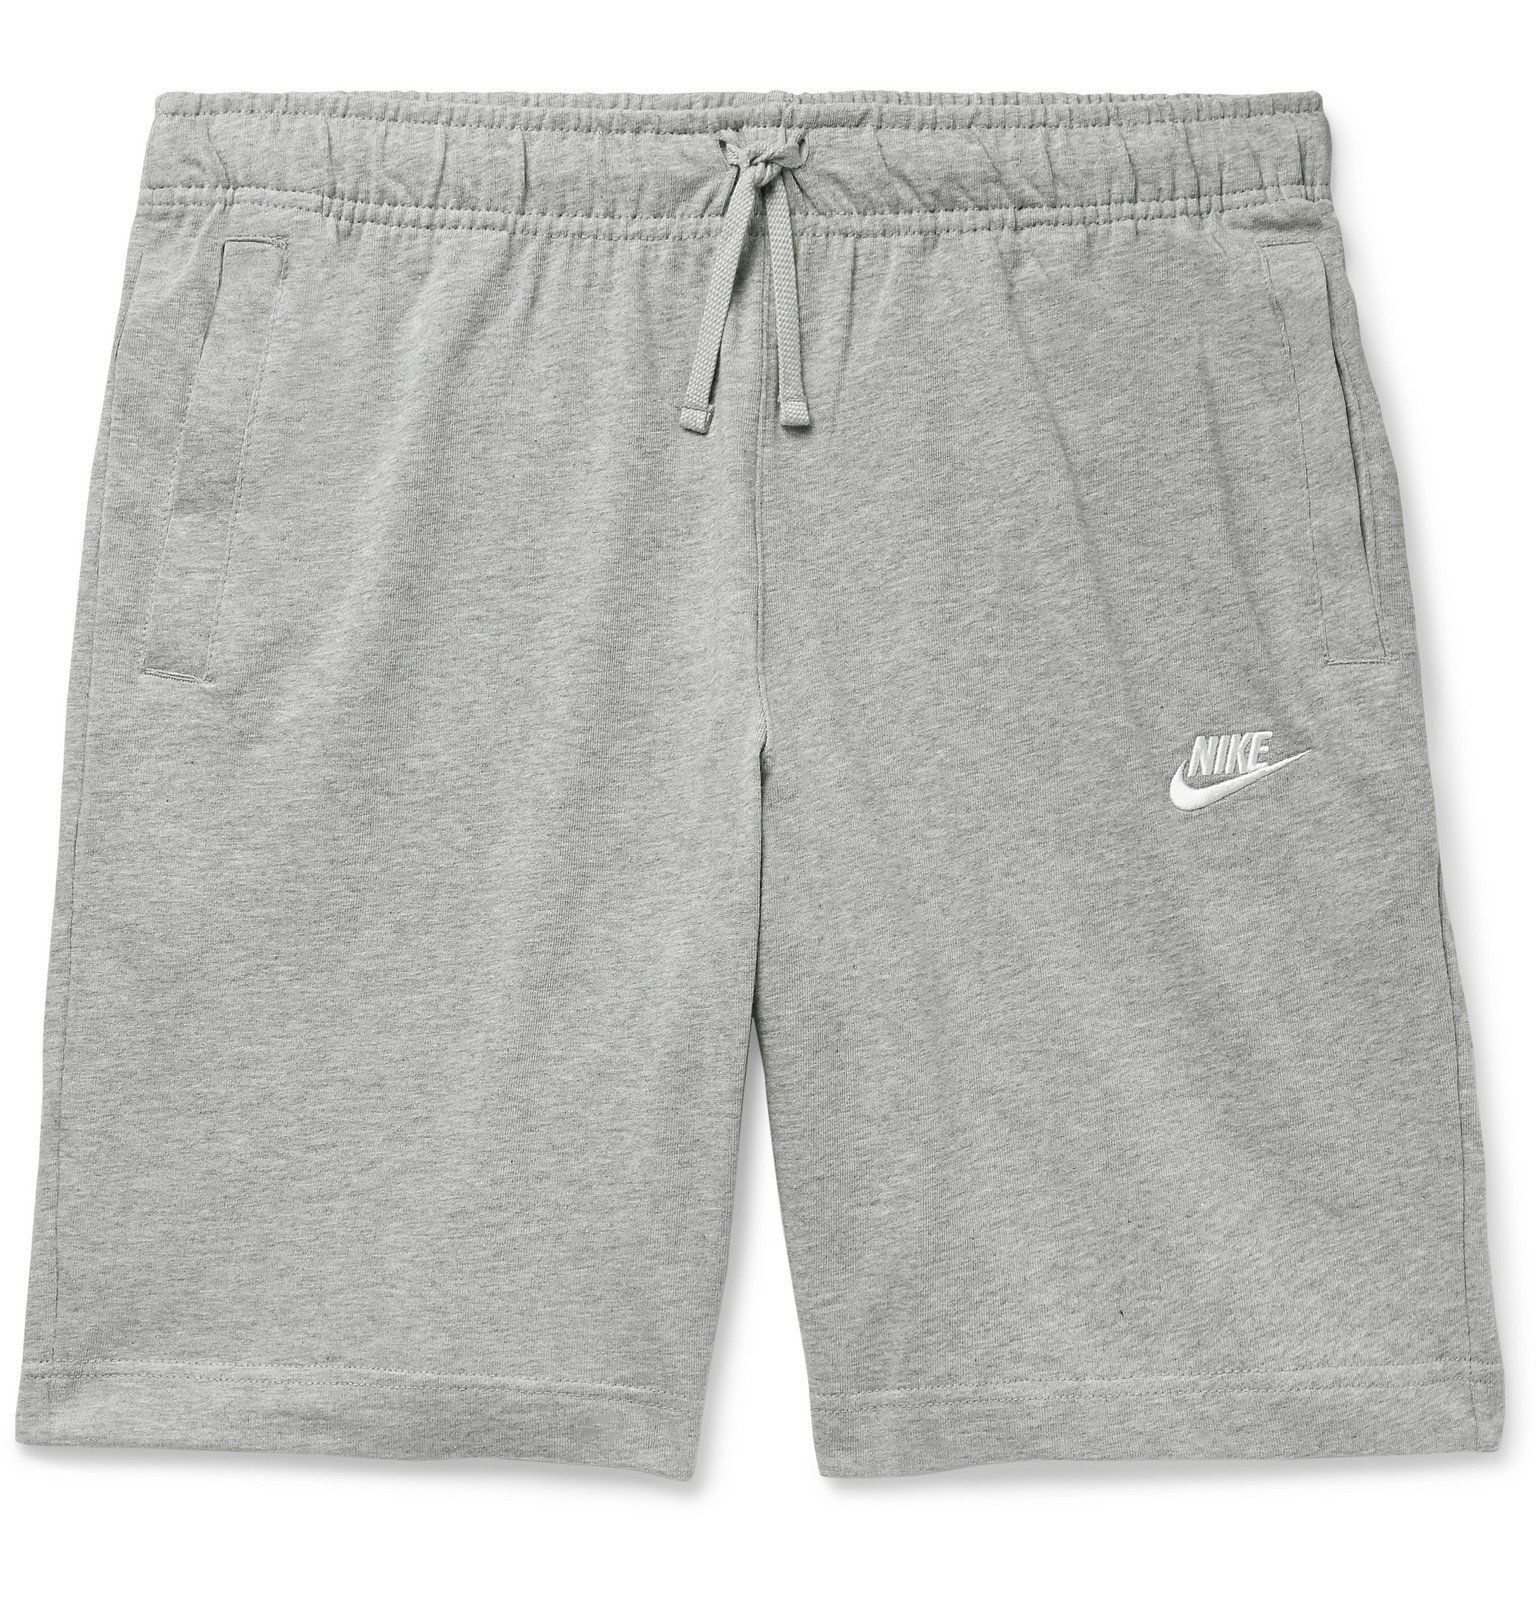 nike grey shorts cotton